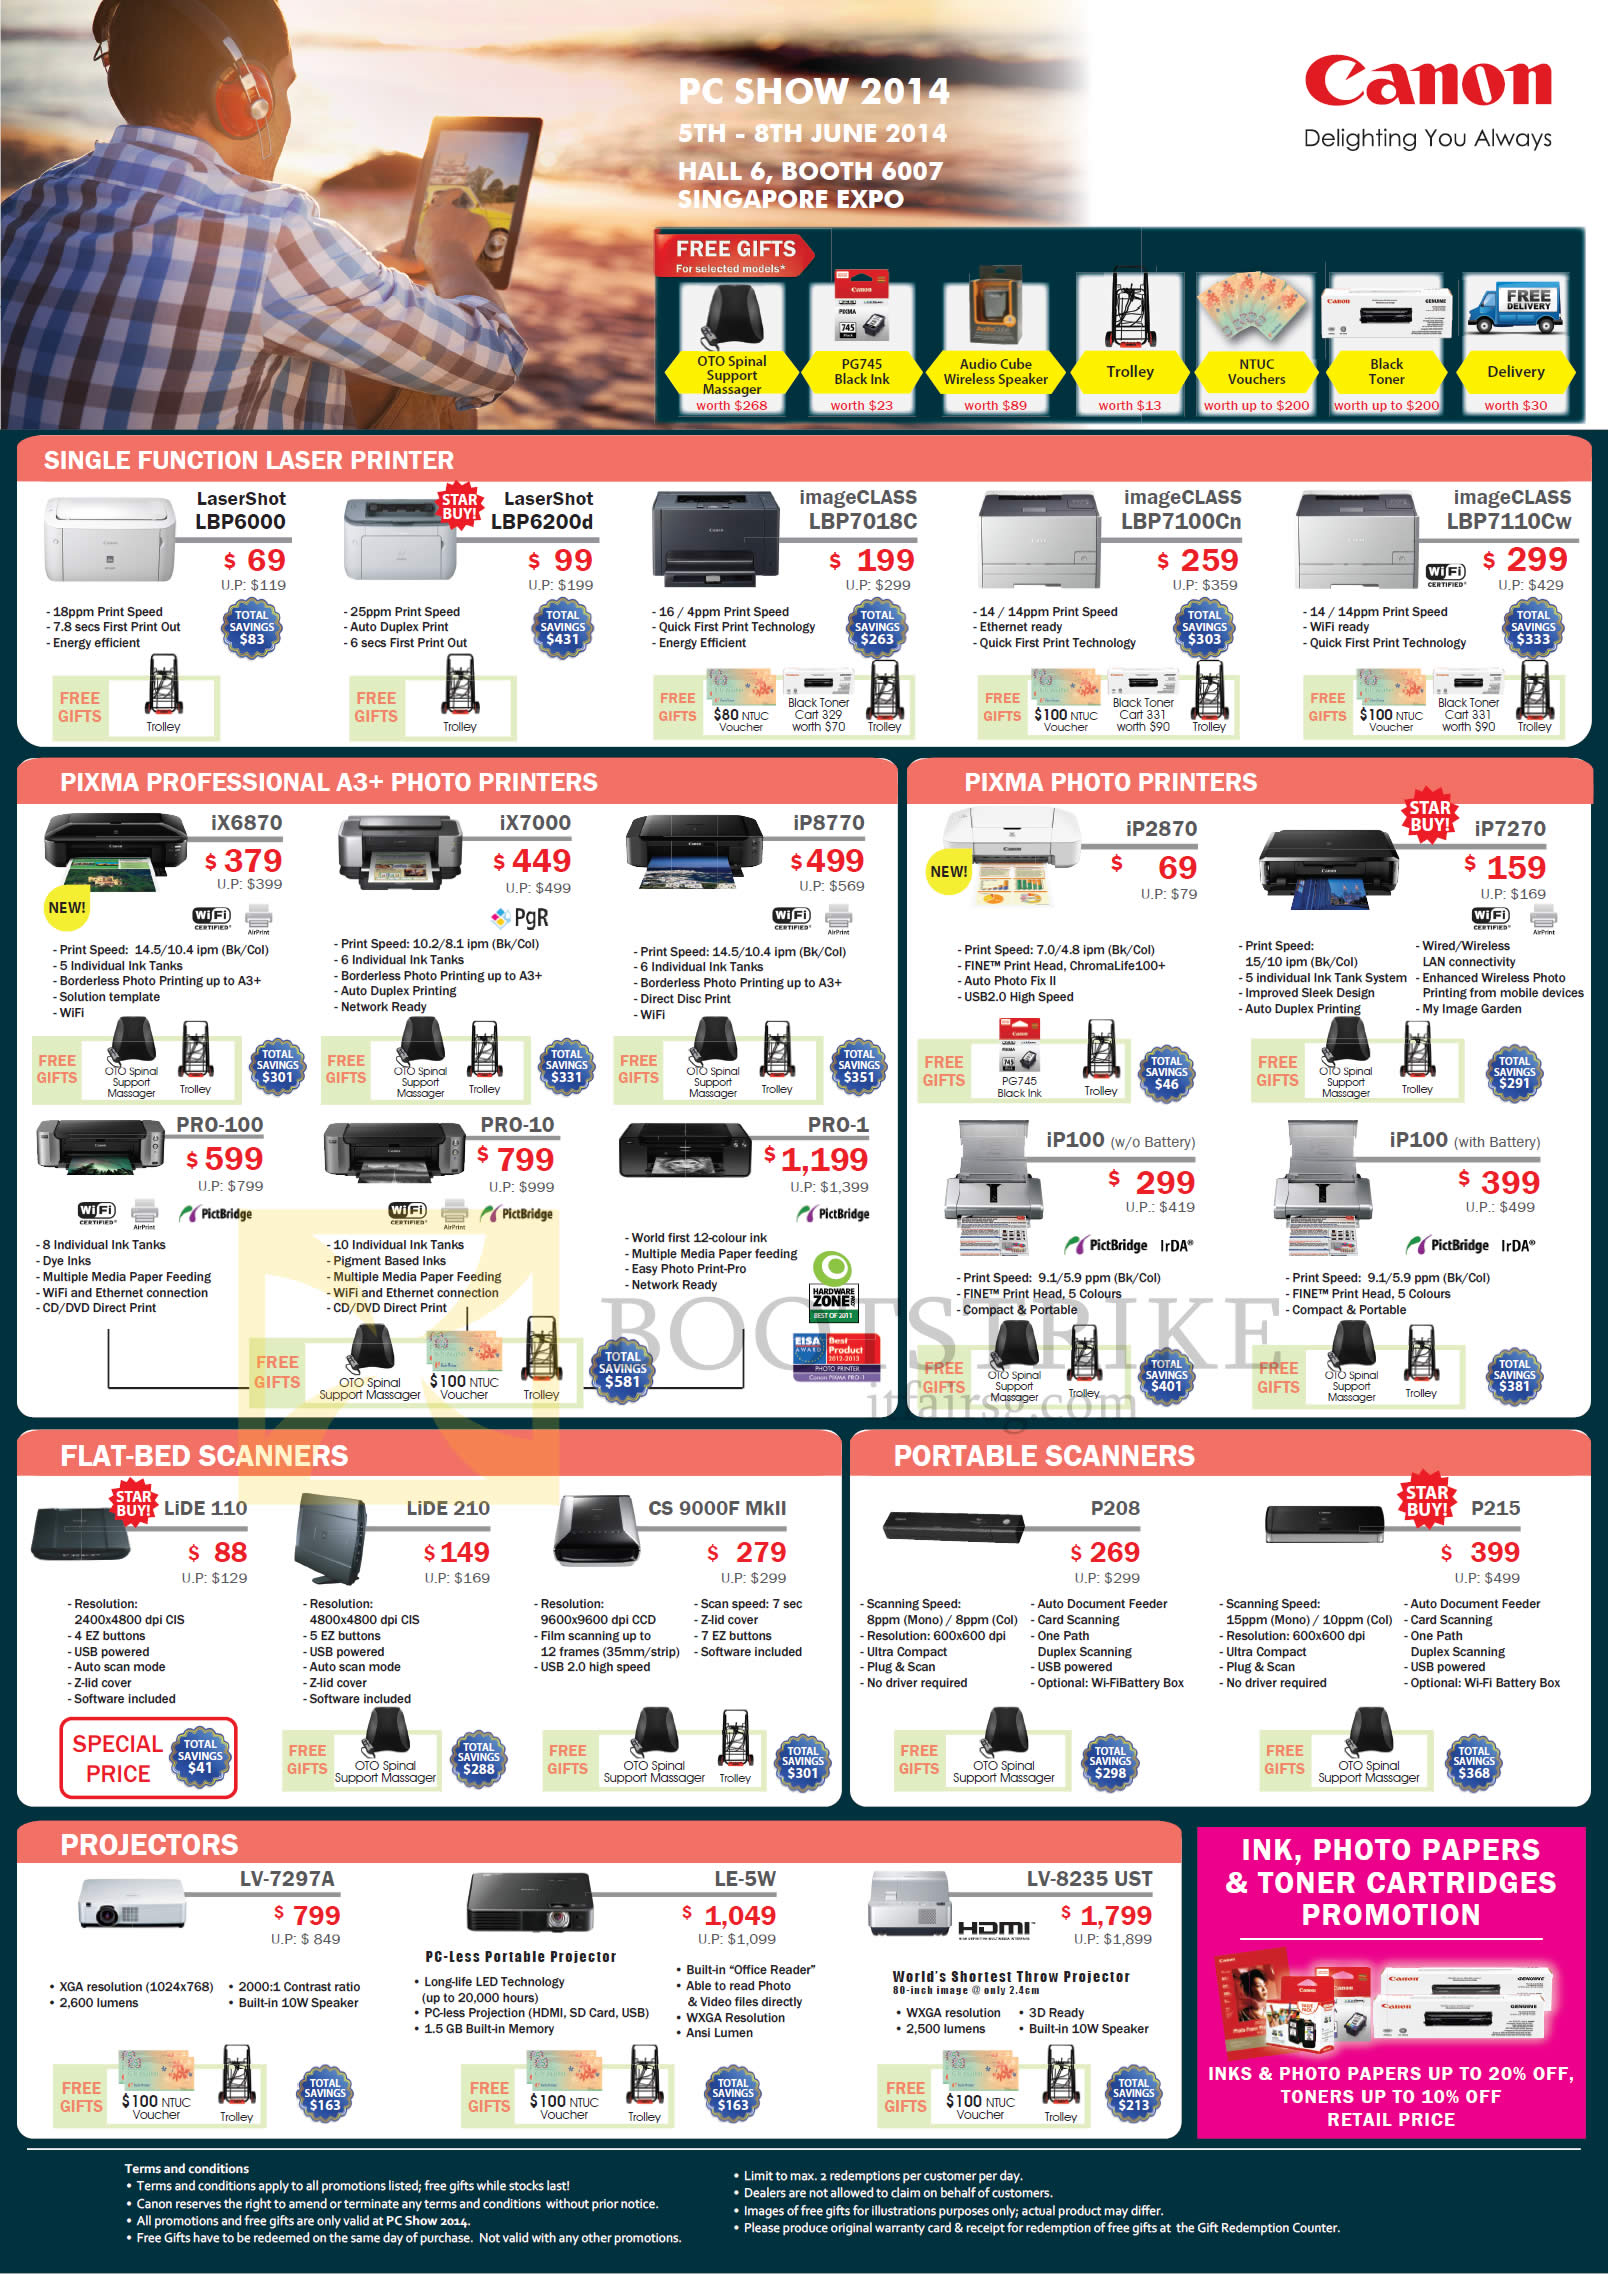 PC SHOW 2014 price list image brochure of Canon Printers, Scanners, Projectors, LBP 6000 6200d 7018C 7100Cn 7110Cw, IX6870 7000 8770 2870 7270, IP100, LiDE 110 210, CS 9000F MkII, P208, P215